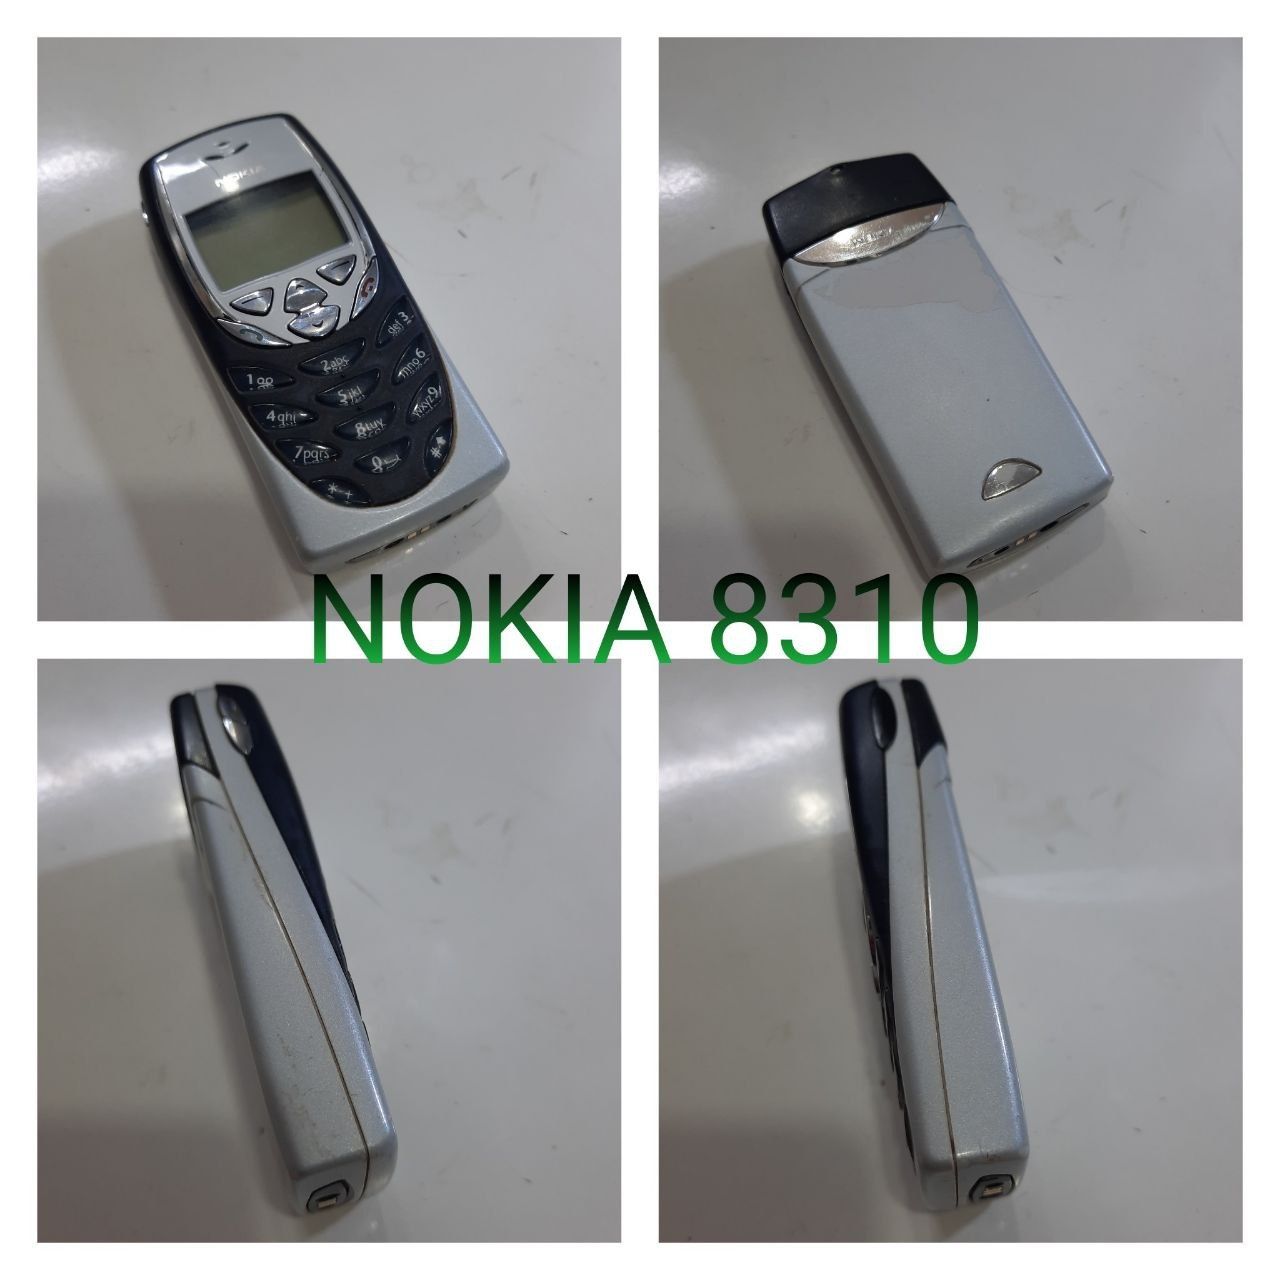 Nokia 8310 sotiladi